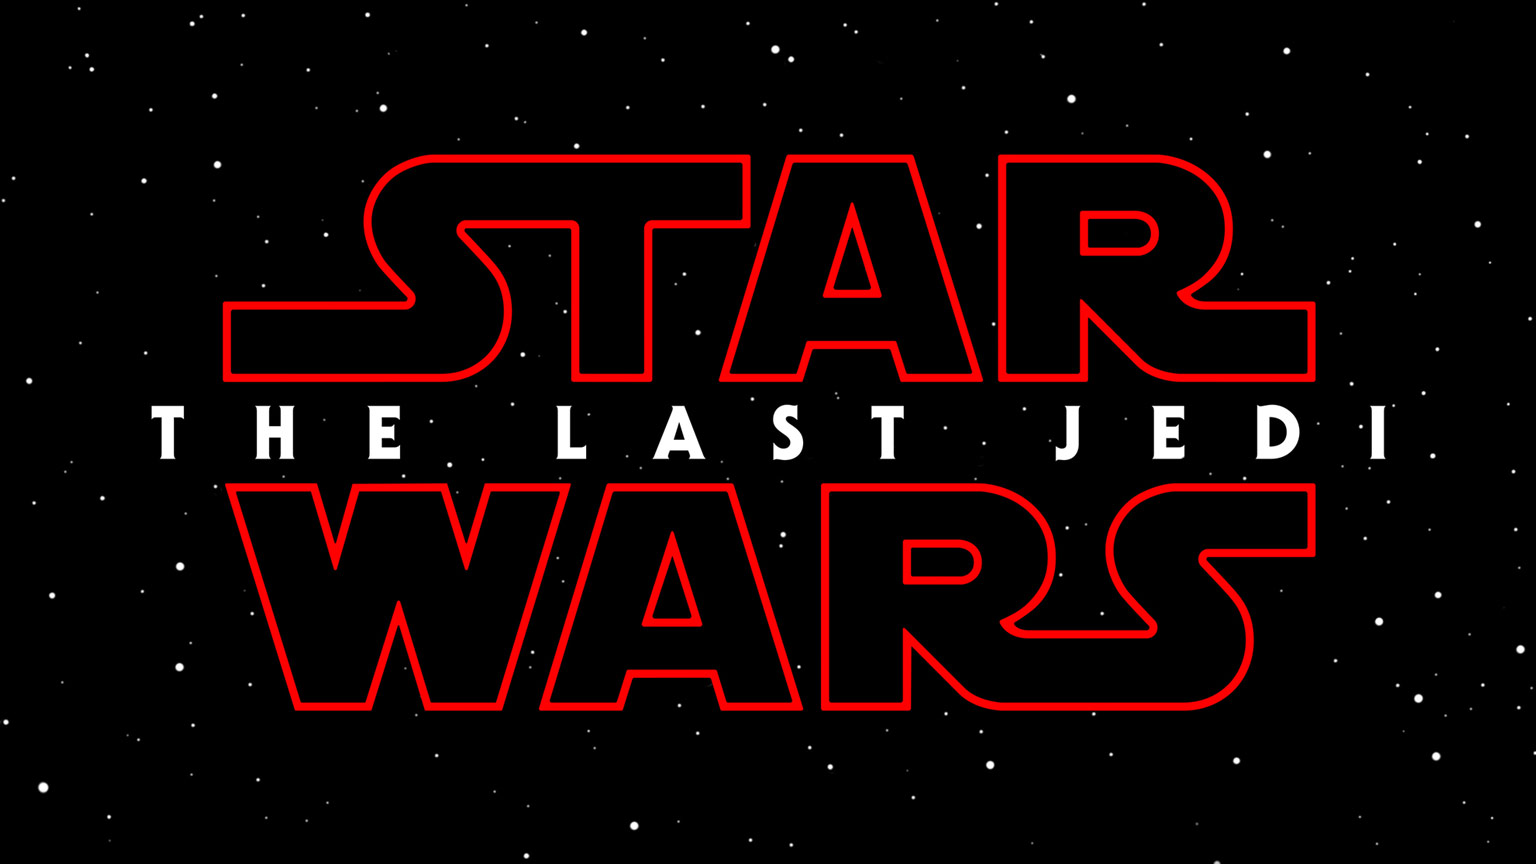 'Star Wars: The Last Jedi' Trailer Reflections